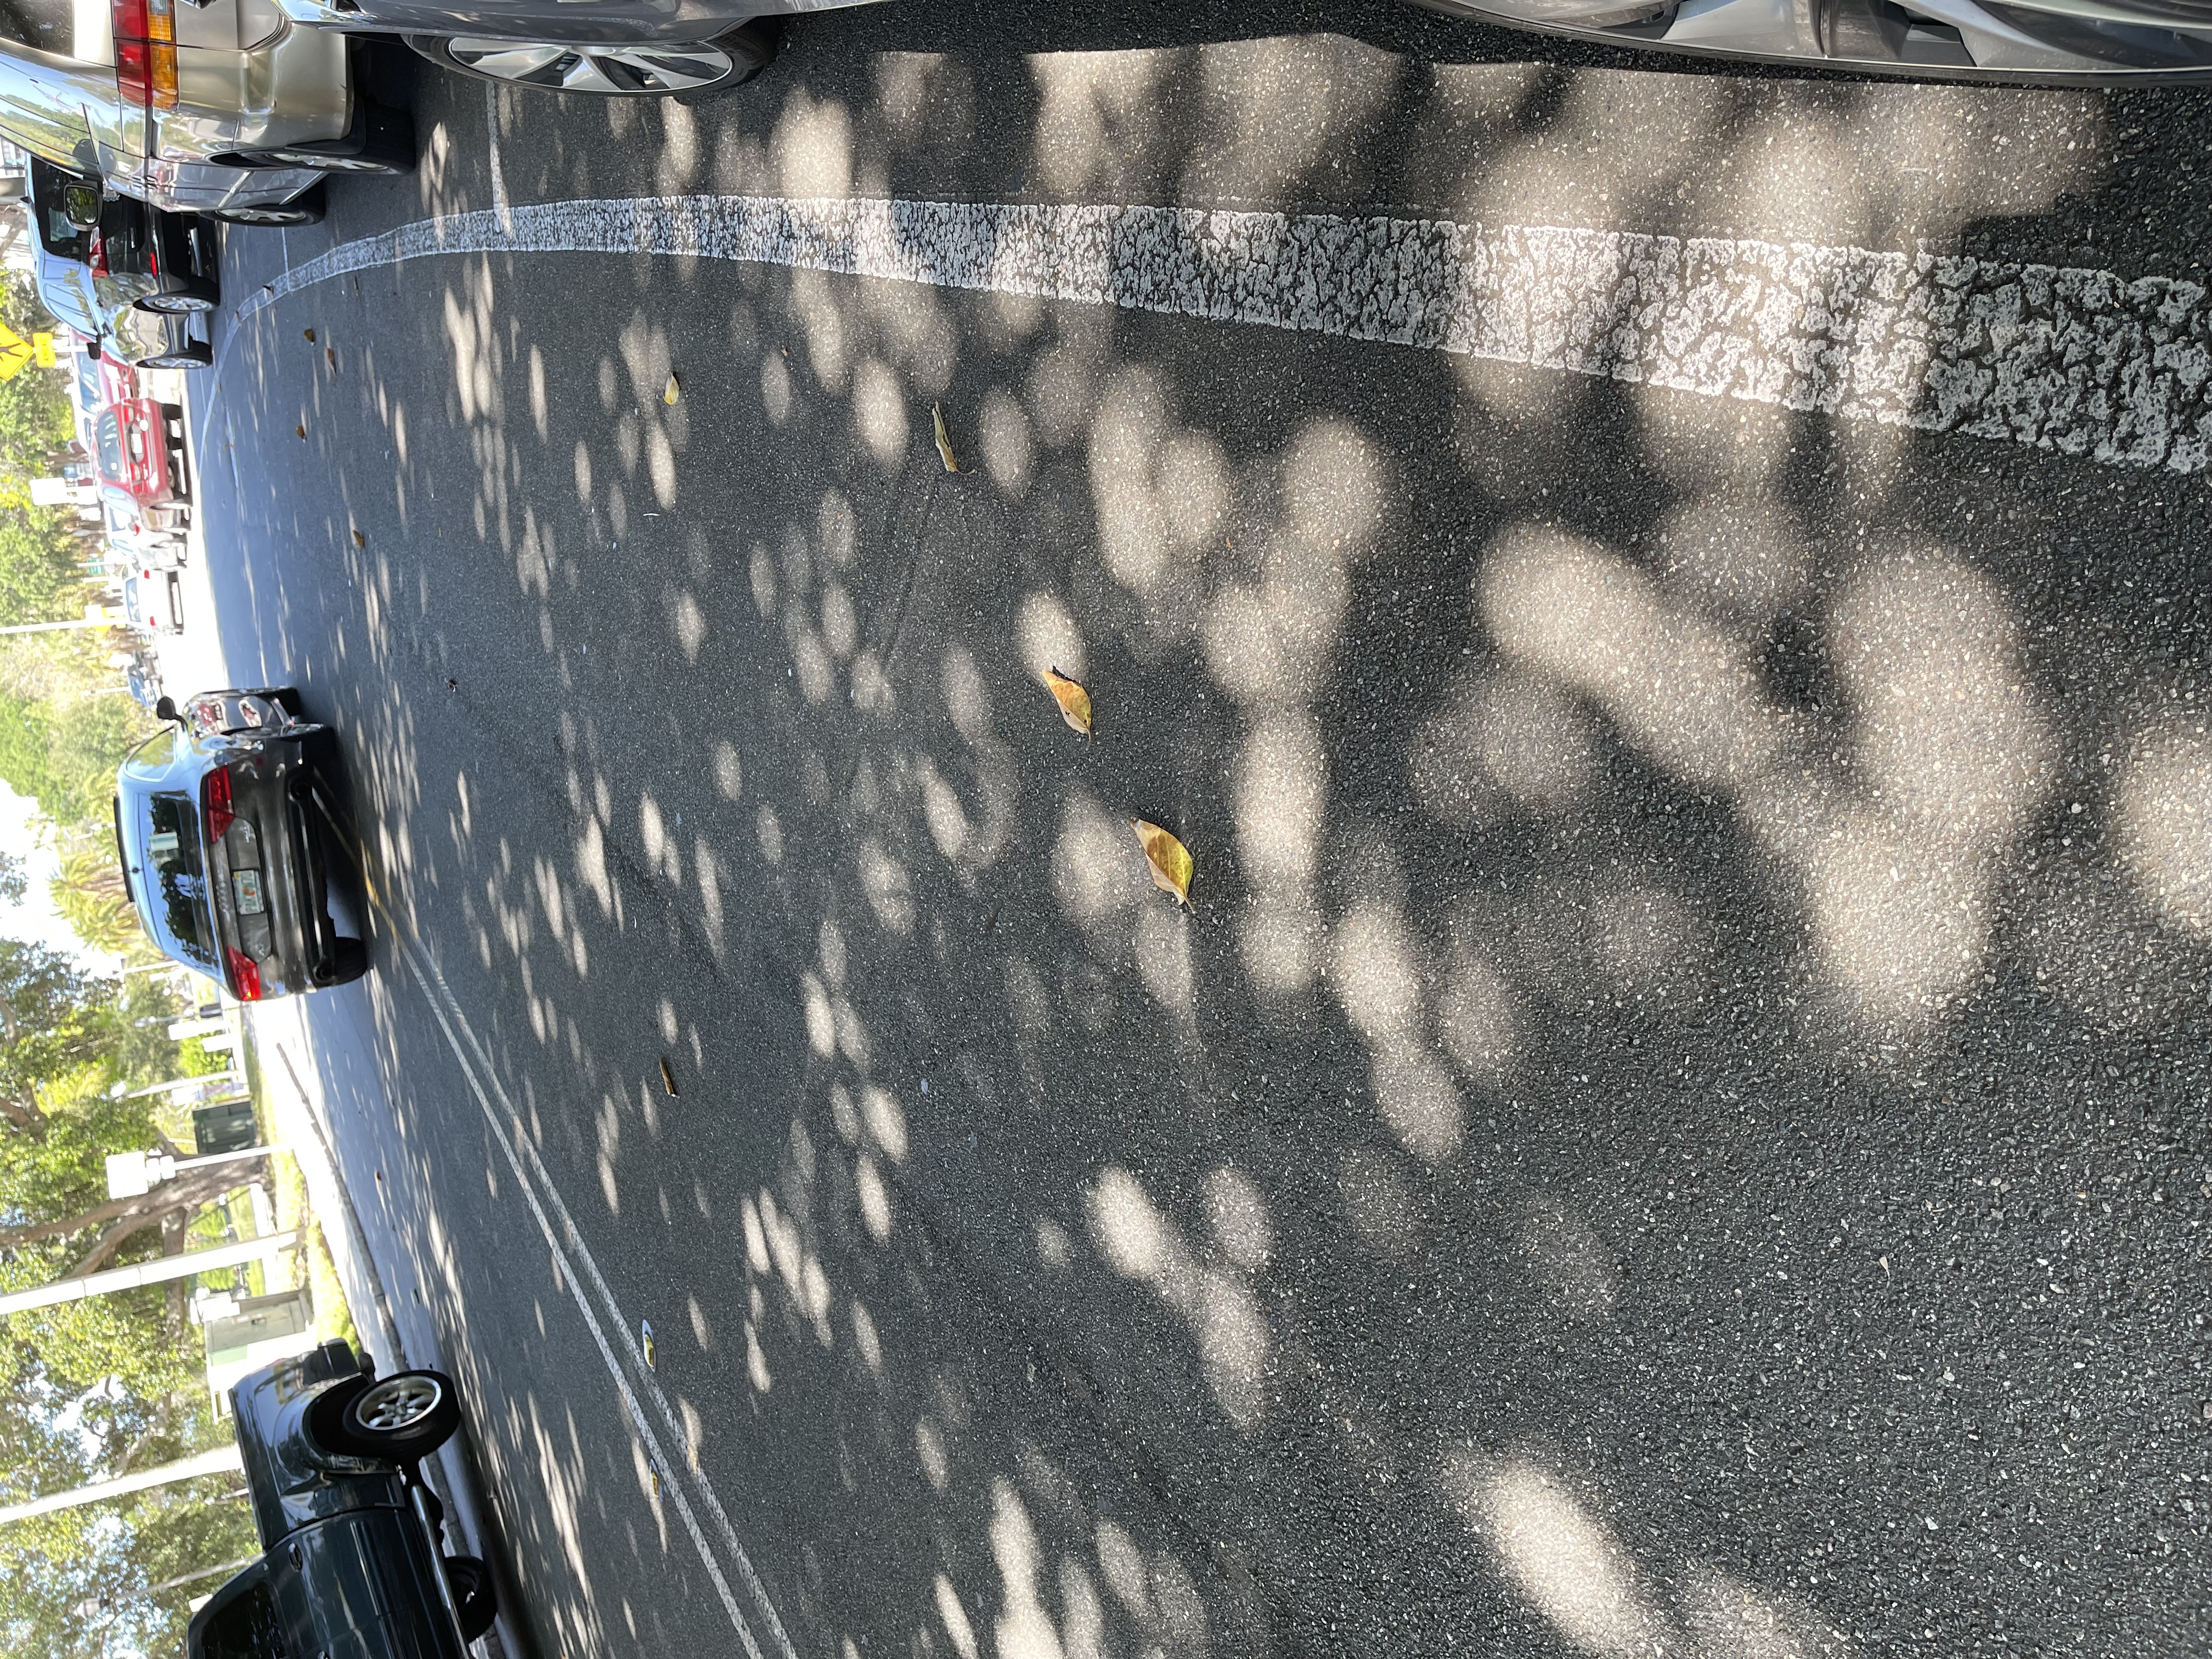 Figure 1. Sunballs on the pavement